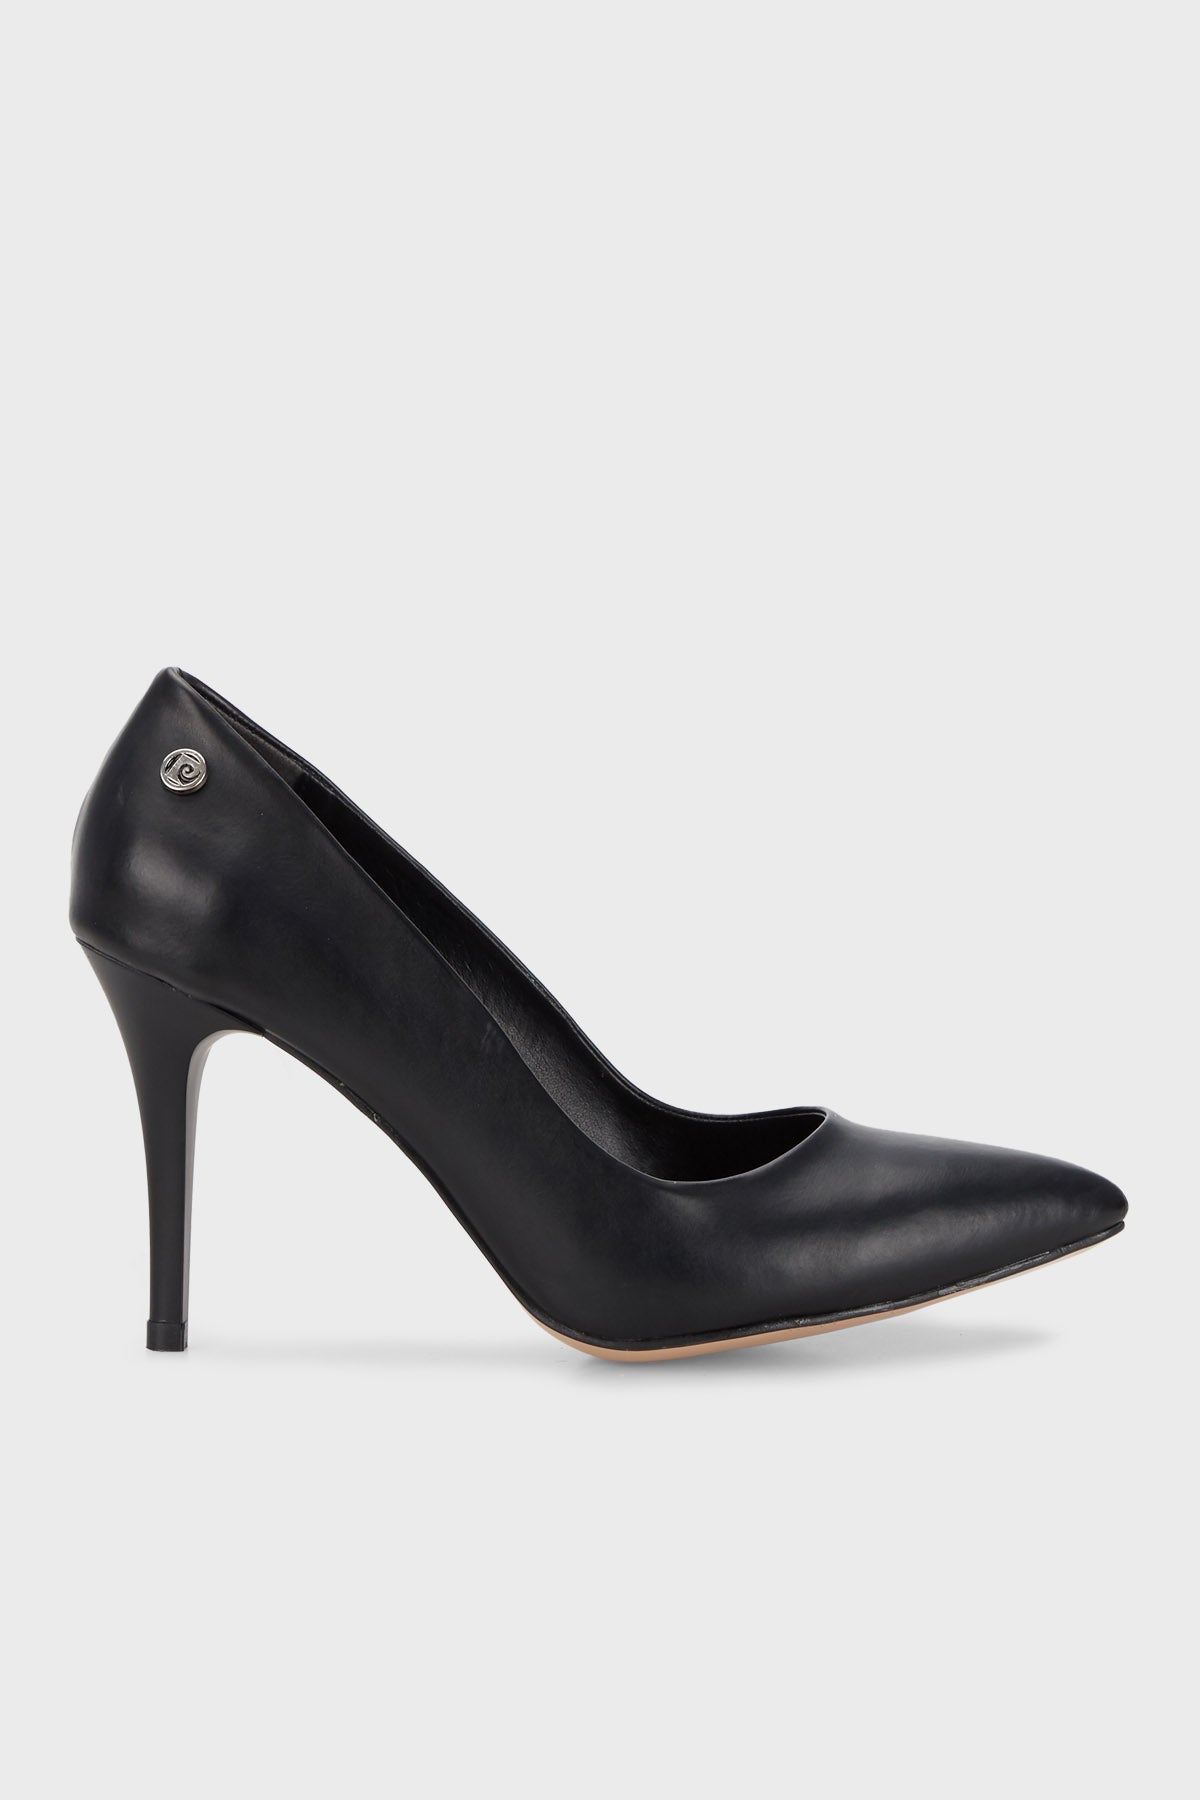 Pierre Cardin Topuklu Stiletto Bayan Ayakkabı PC52210 SİYAH